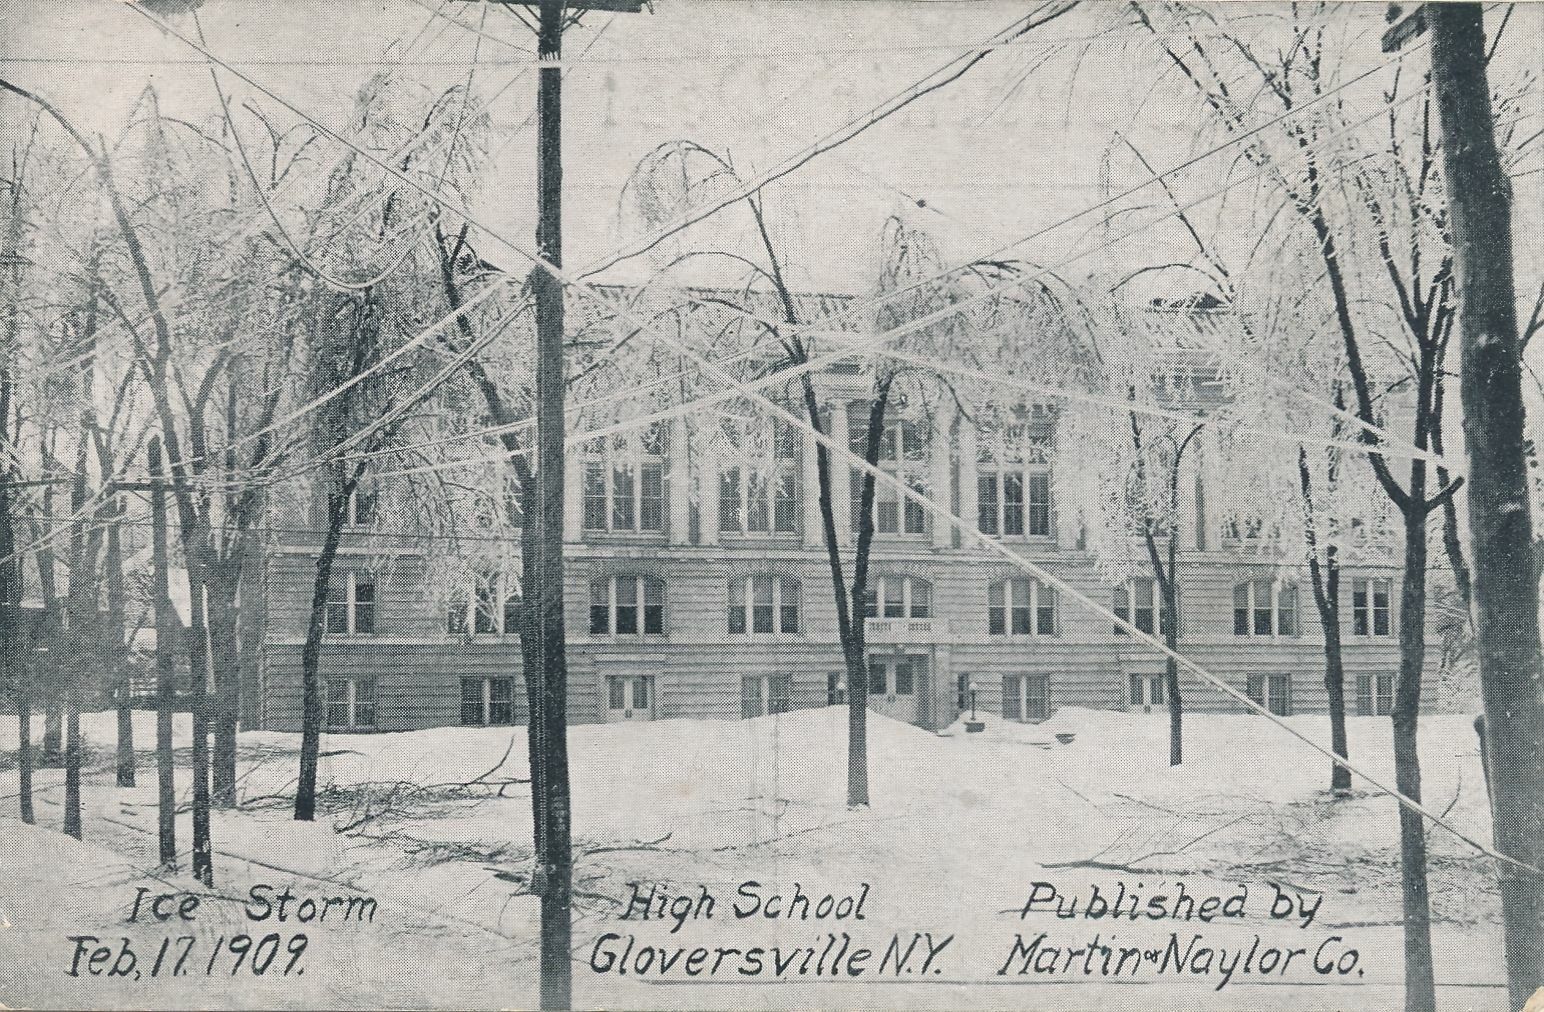 GLOVERSVILLE NY - High School February 17, 1909 Ice Storm